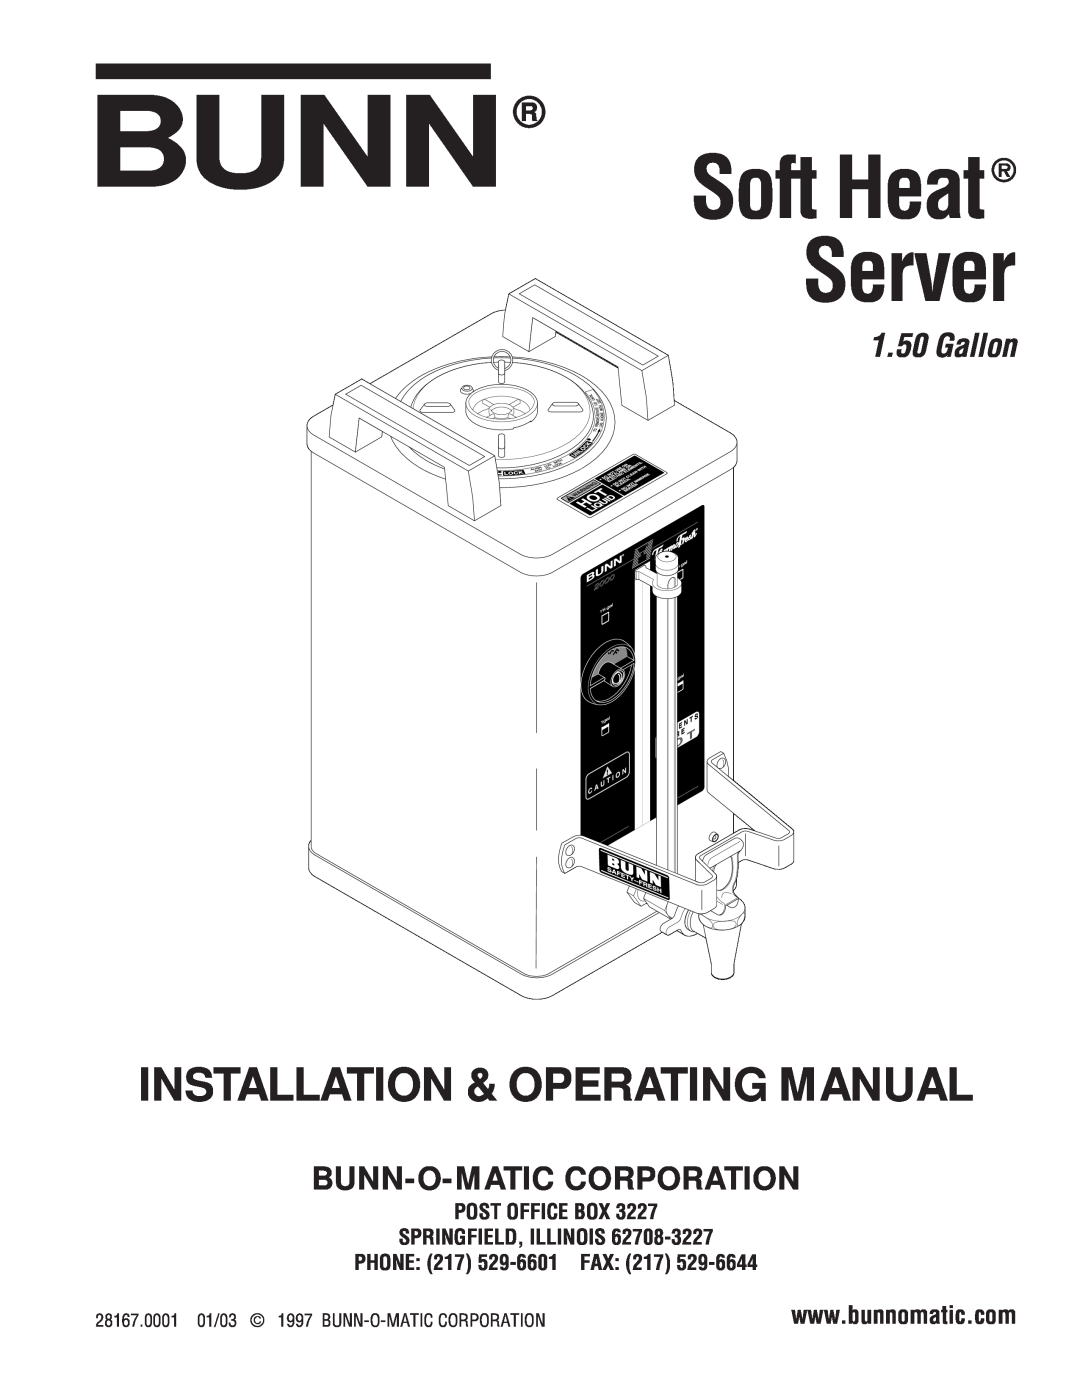 Bunn Soft Heat Server 1.50 Gallon manual Installation & Operating Manual, Bunn-O-Maticcorporation 